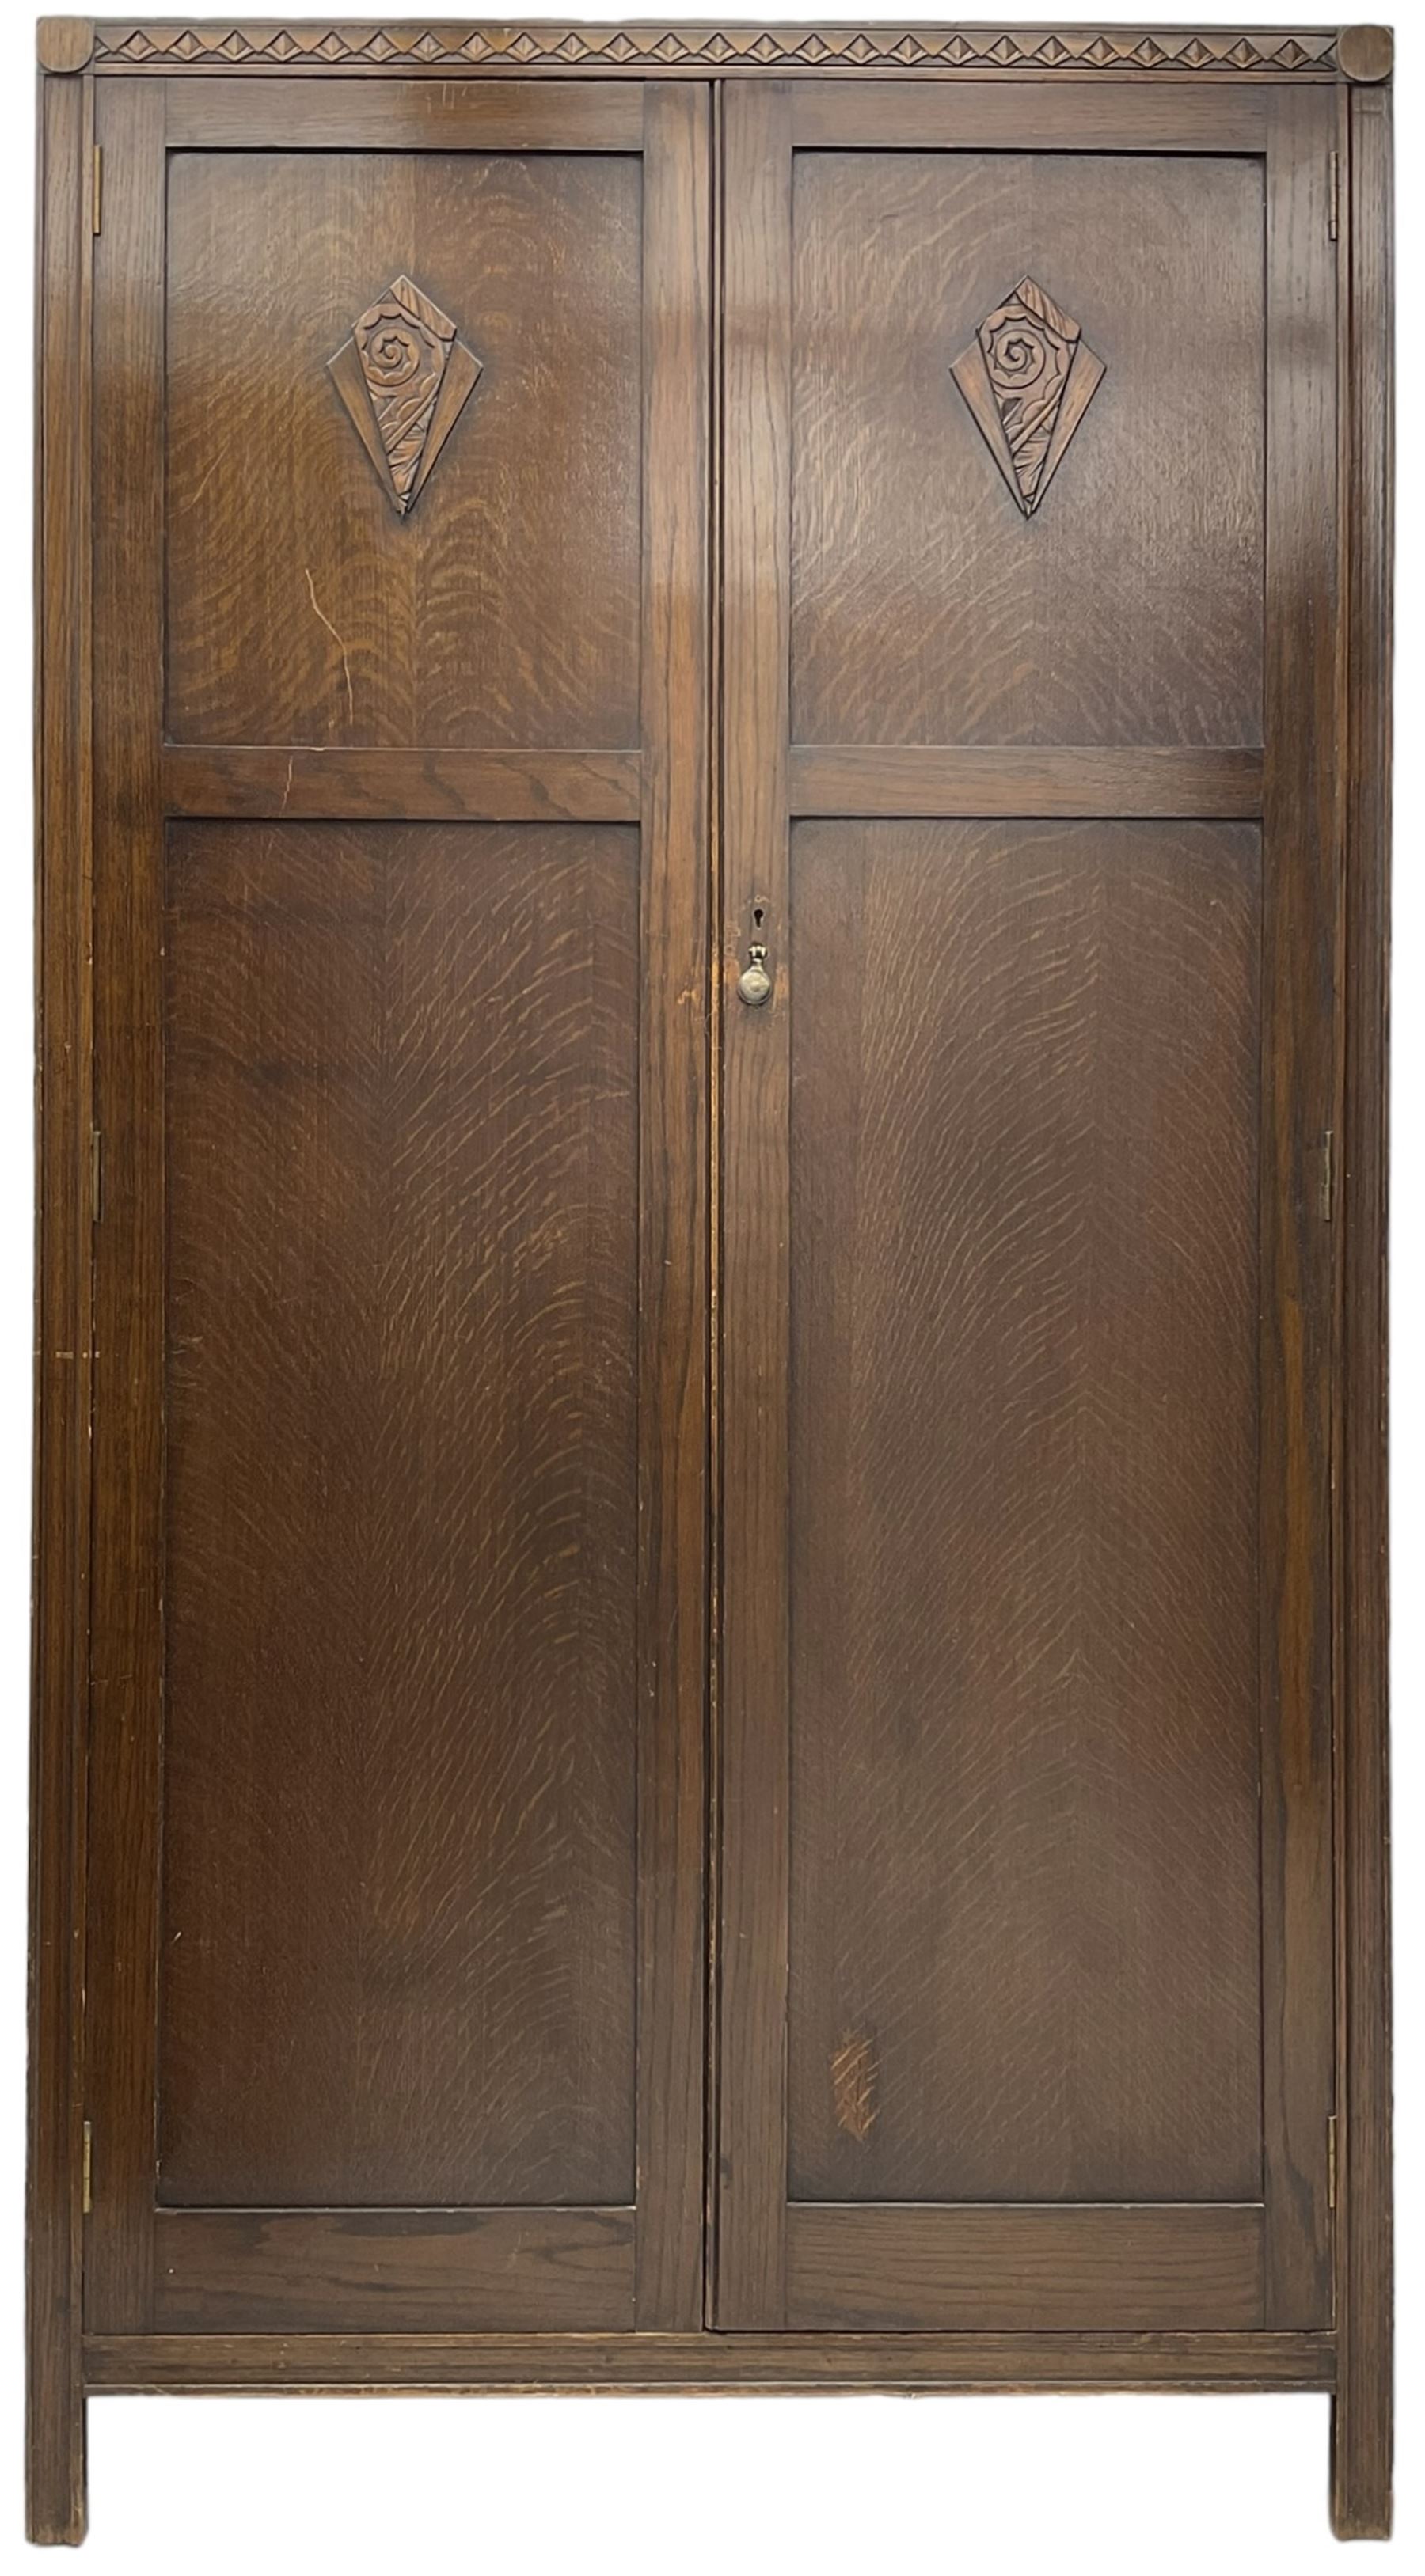 Mid-20th century oak wardrobe - Image 10 of 21